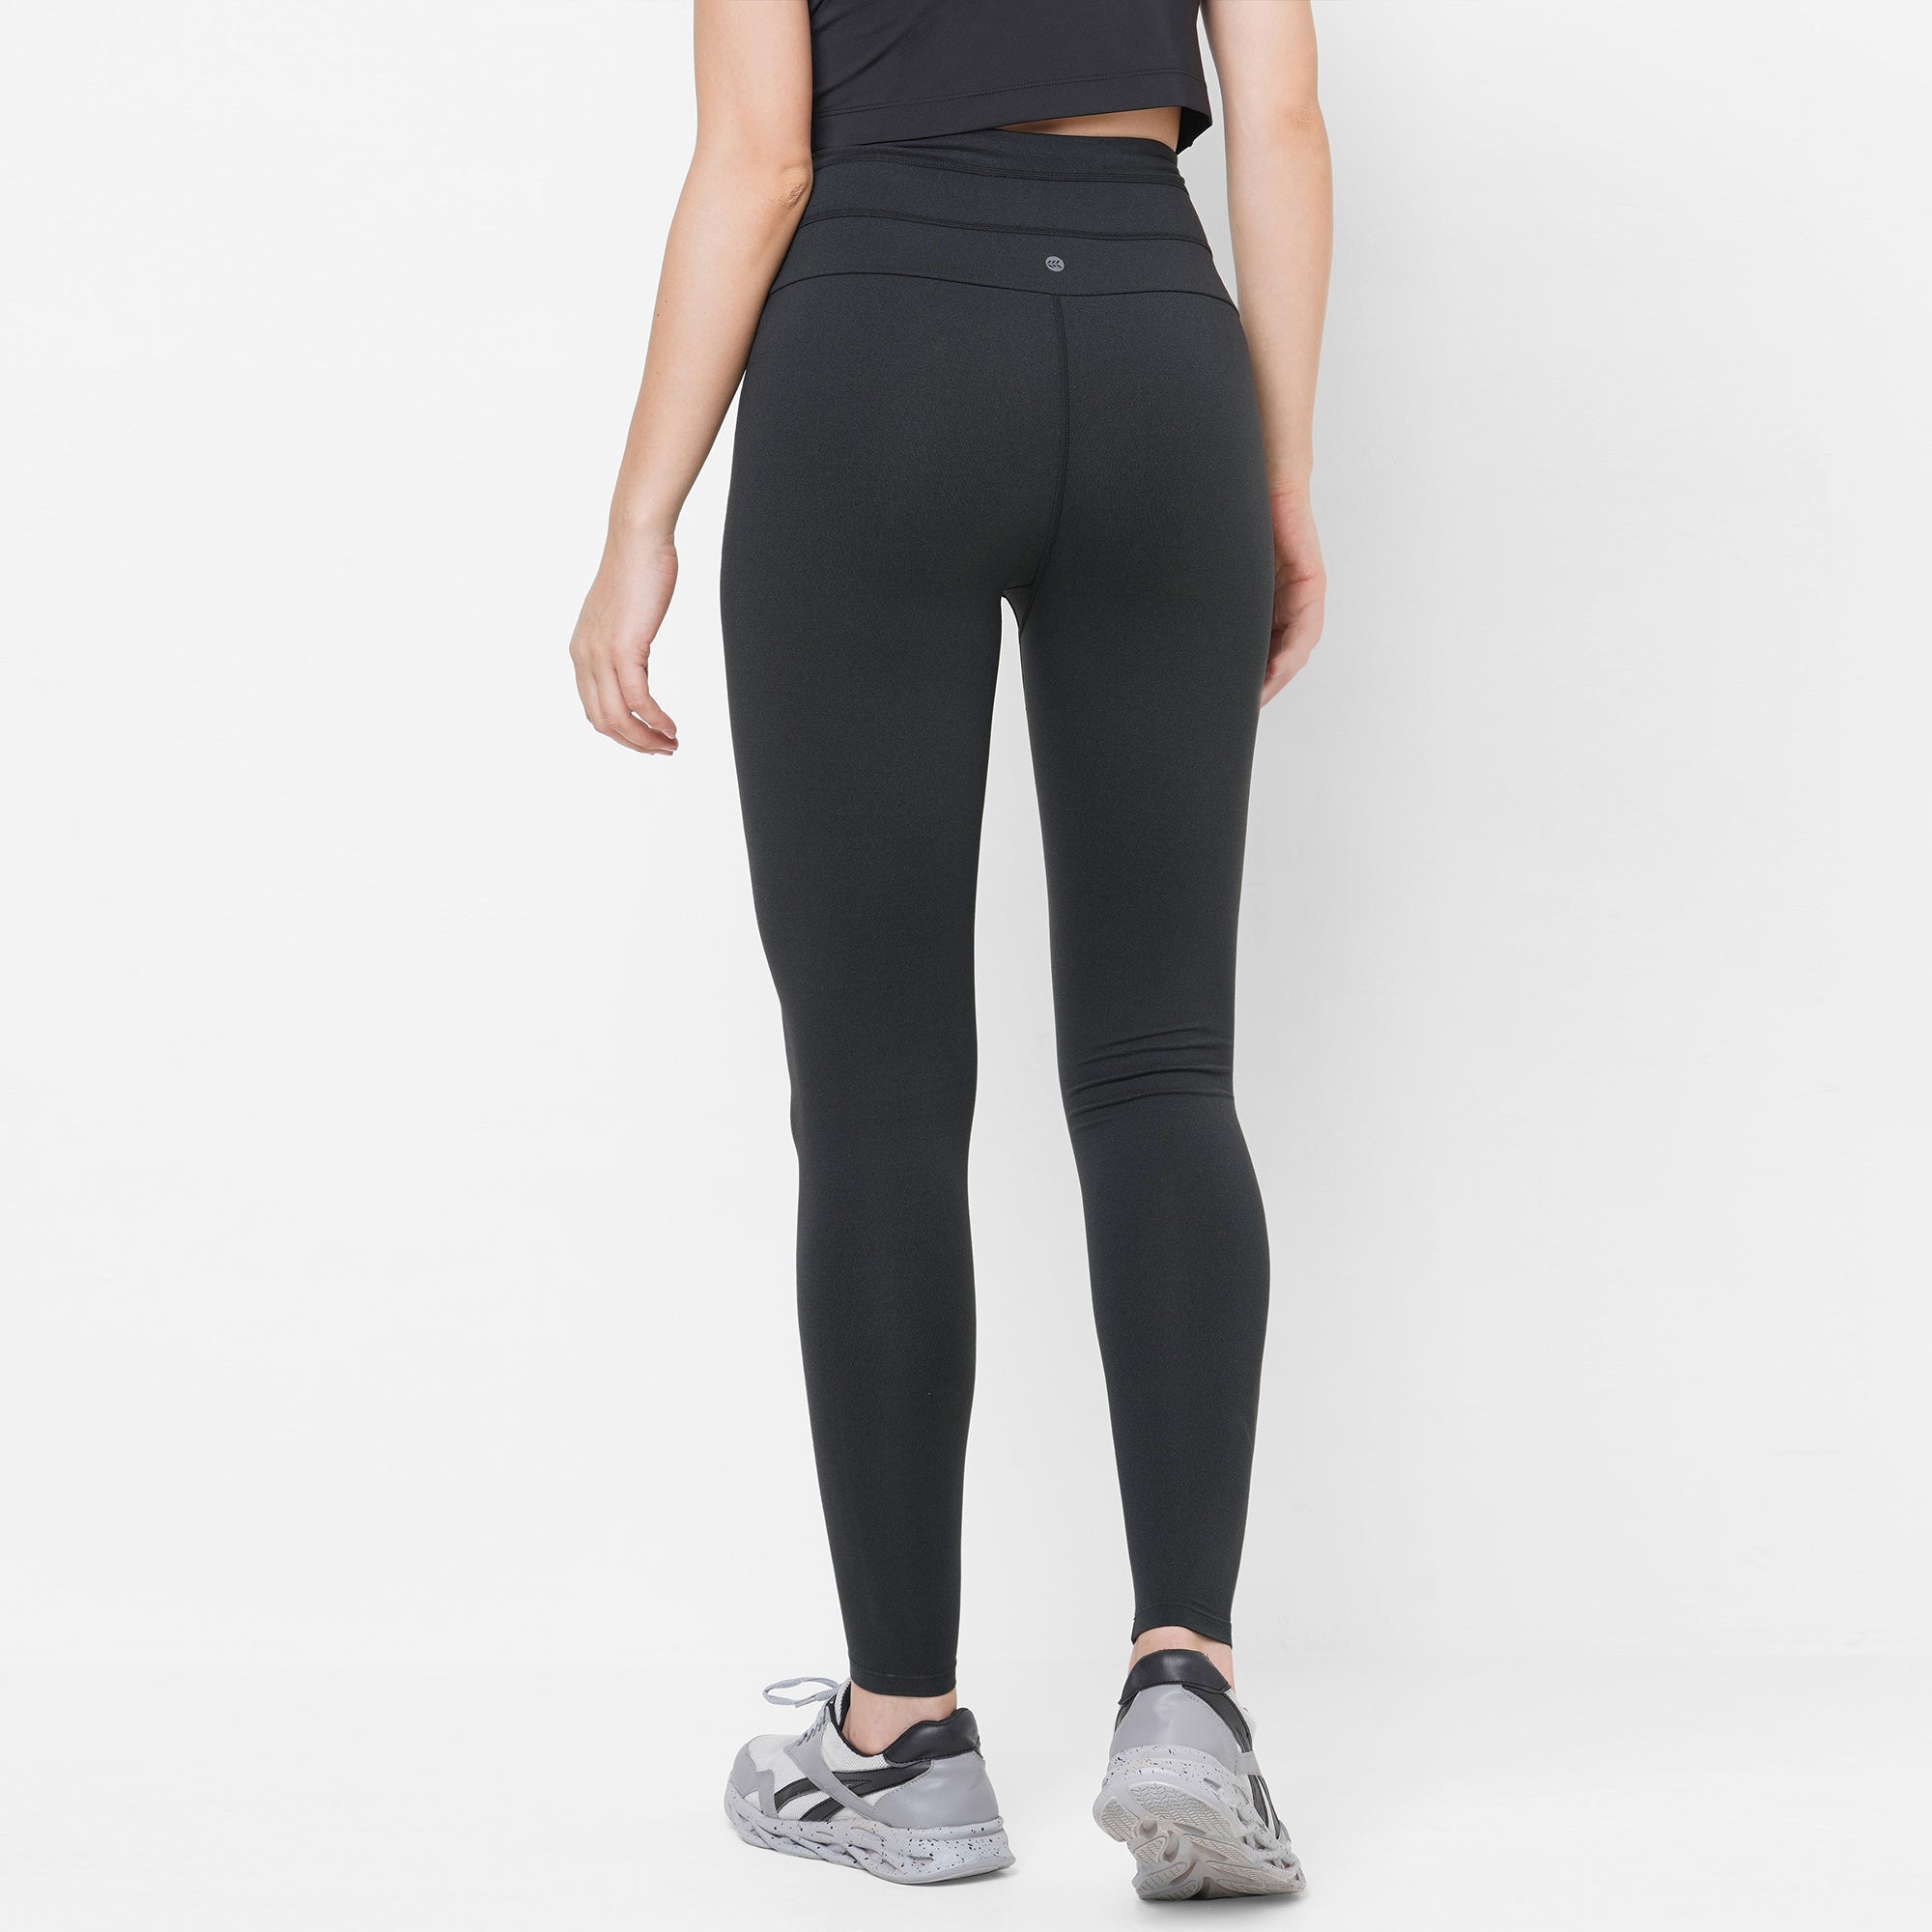 World of Leggings PLUS SIZE Basic Nylon Spandex Leggings Black, One Size  Plus at Amazon Women's Clothing store